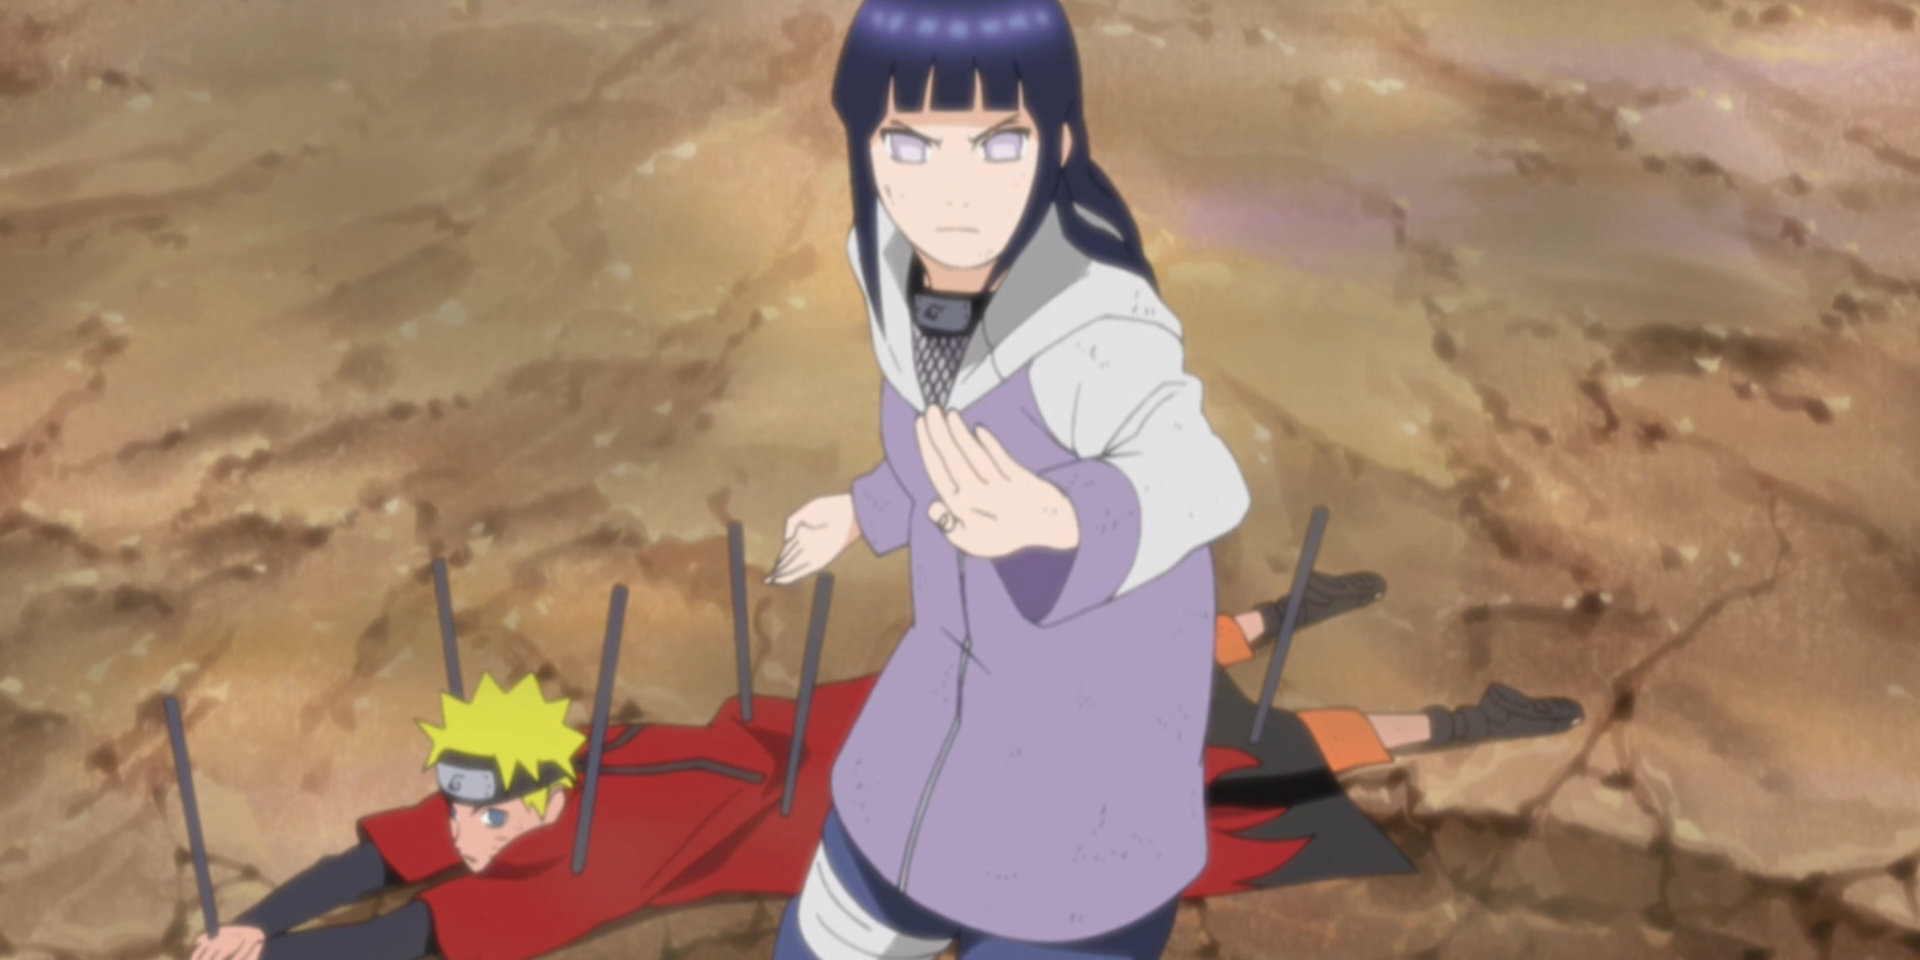 Hinata protecting Naruto in the anime.